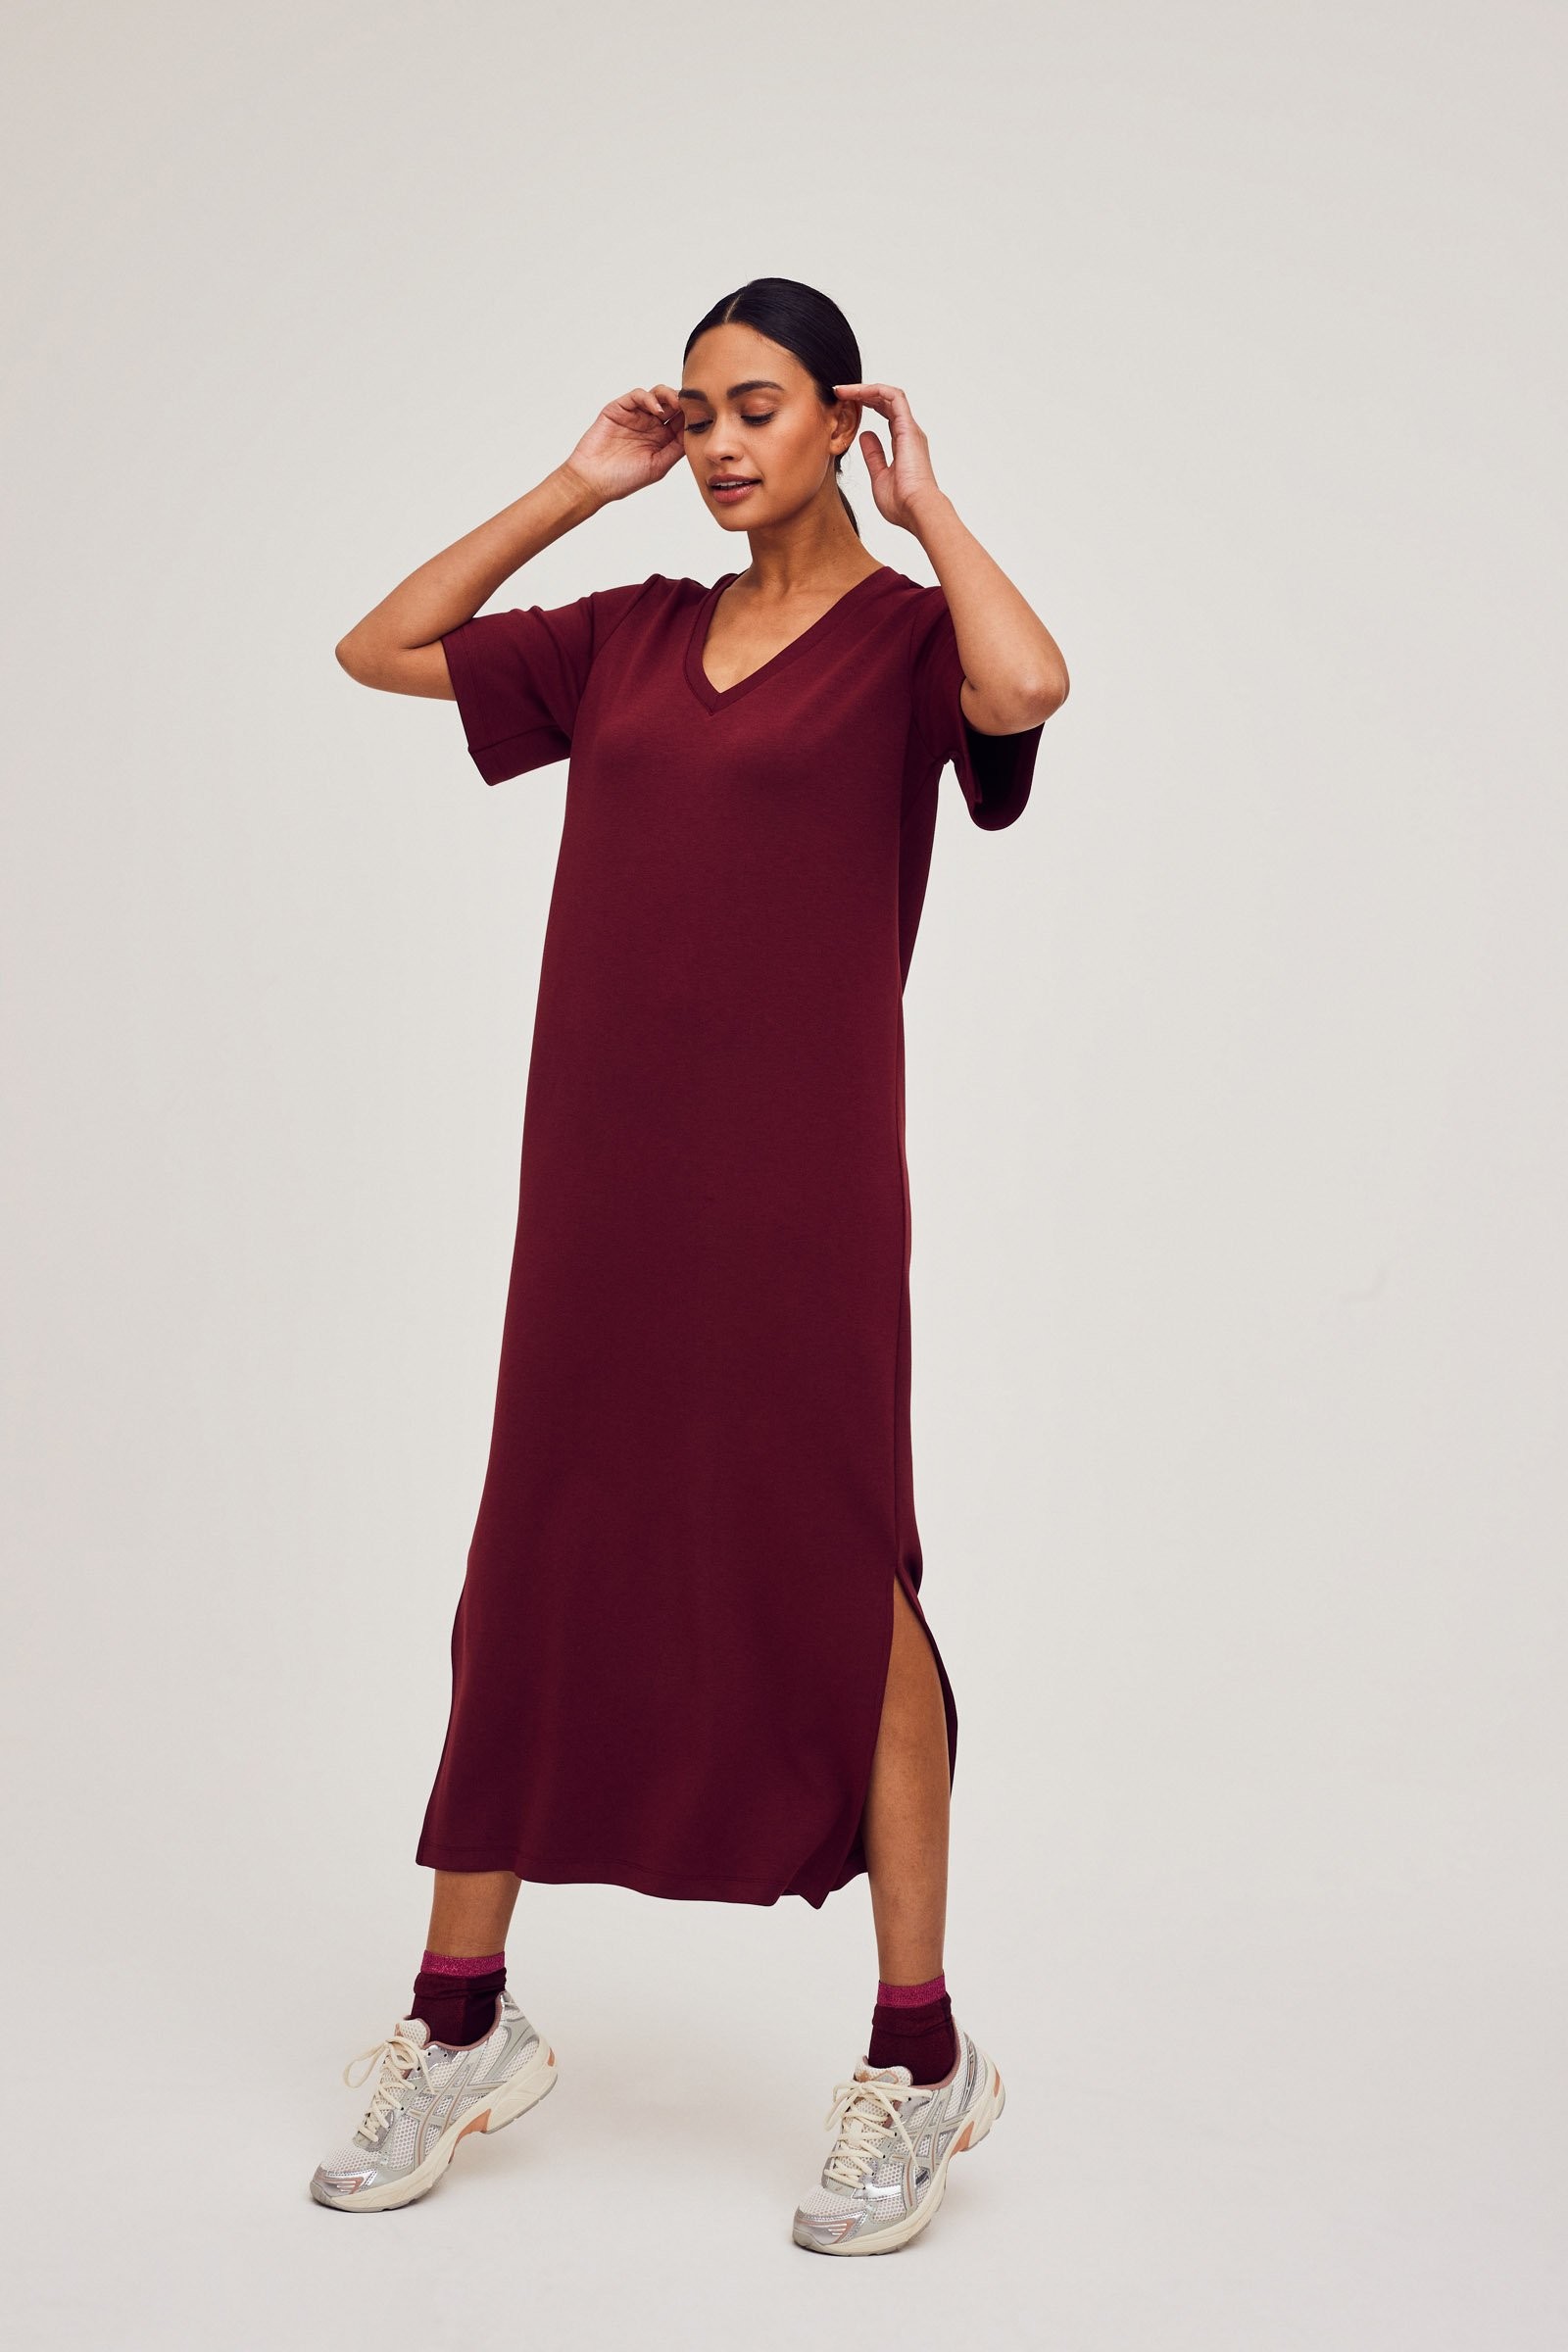 Agnes Gray uitblinken Zoeken JILL - lange jurk - rood | CKS Fashion